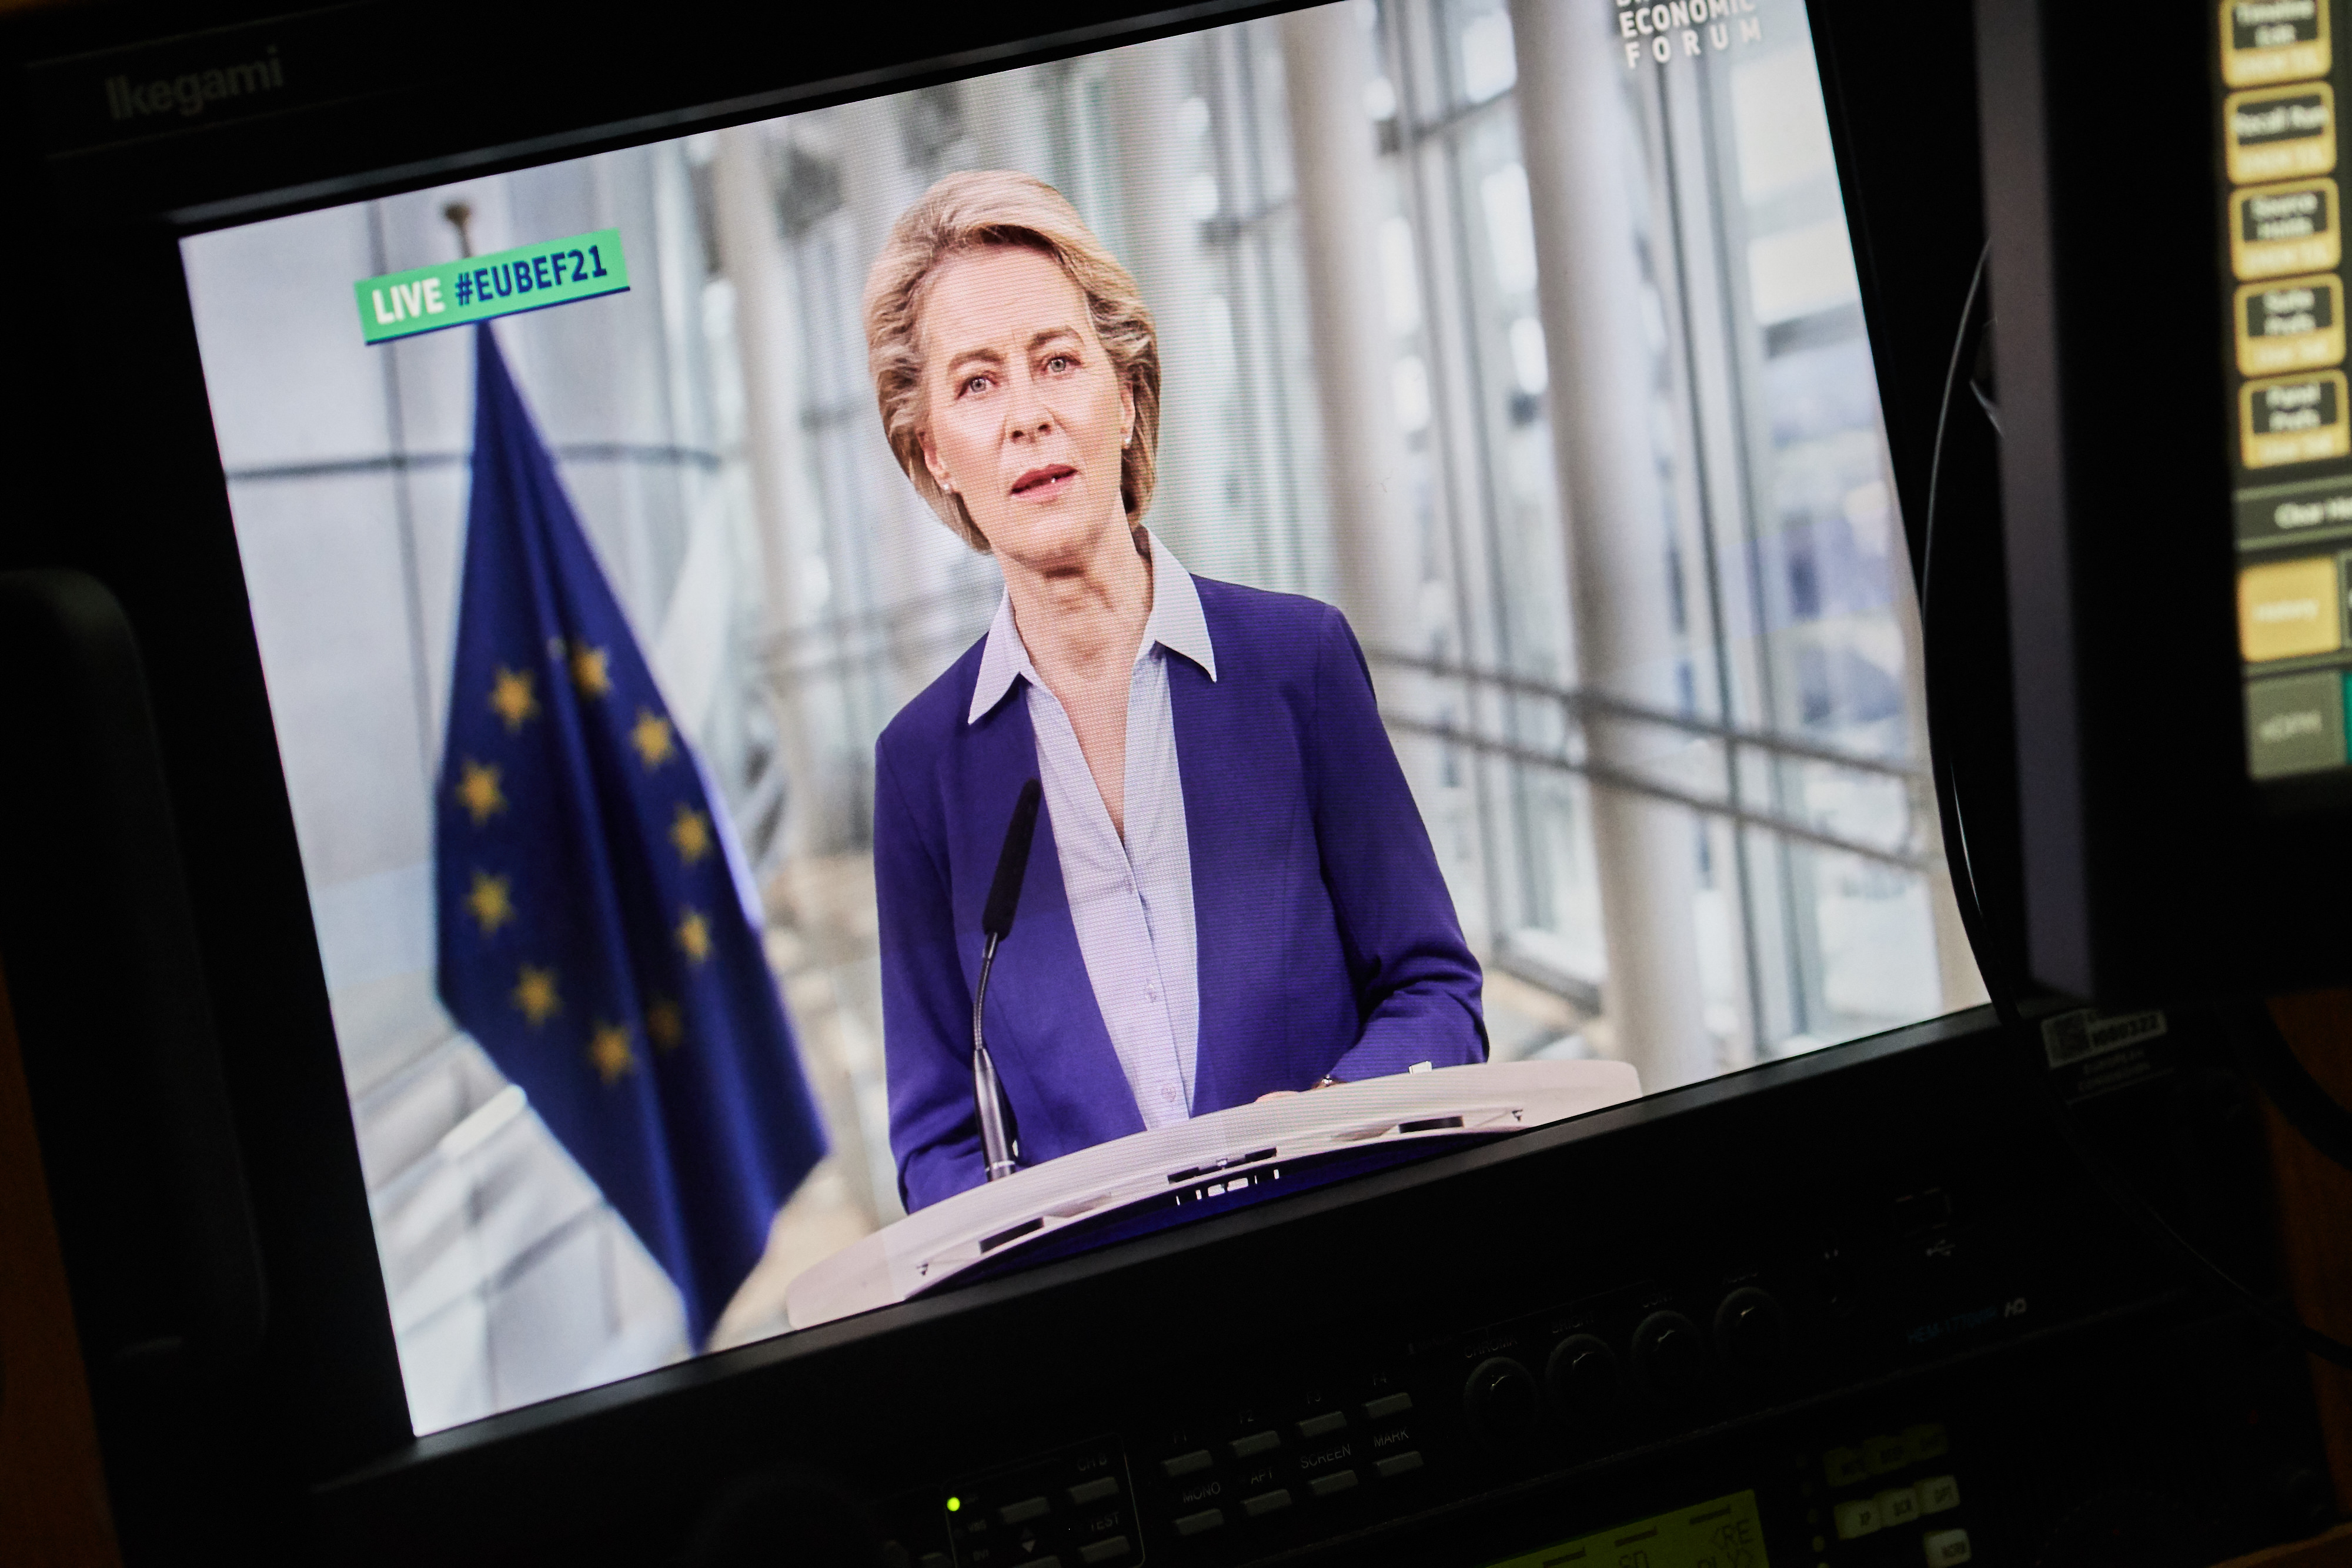 Bouncing Back: President Ursula von der Leyen Looks Forward to EU Recovery
